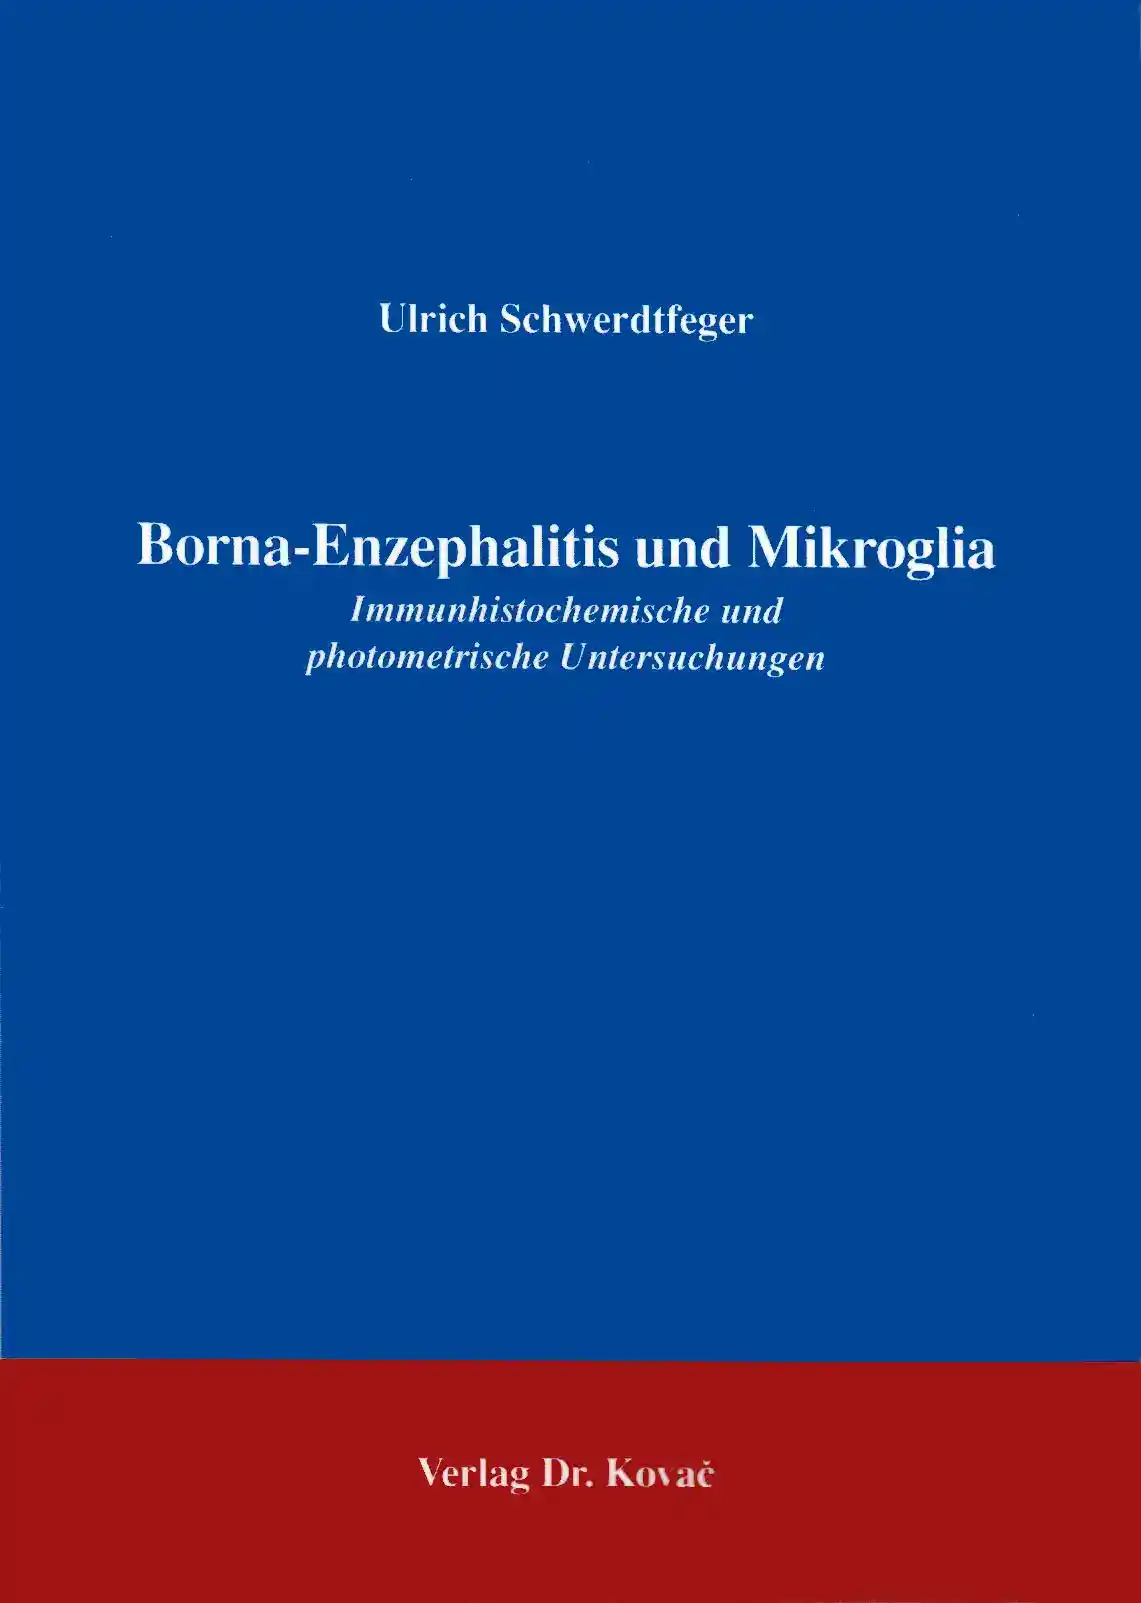 : Borna-Enzephalitis und Mikroglia